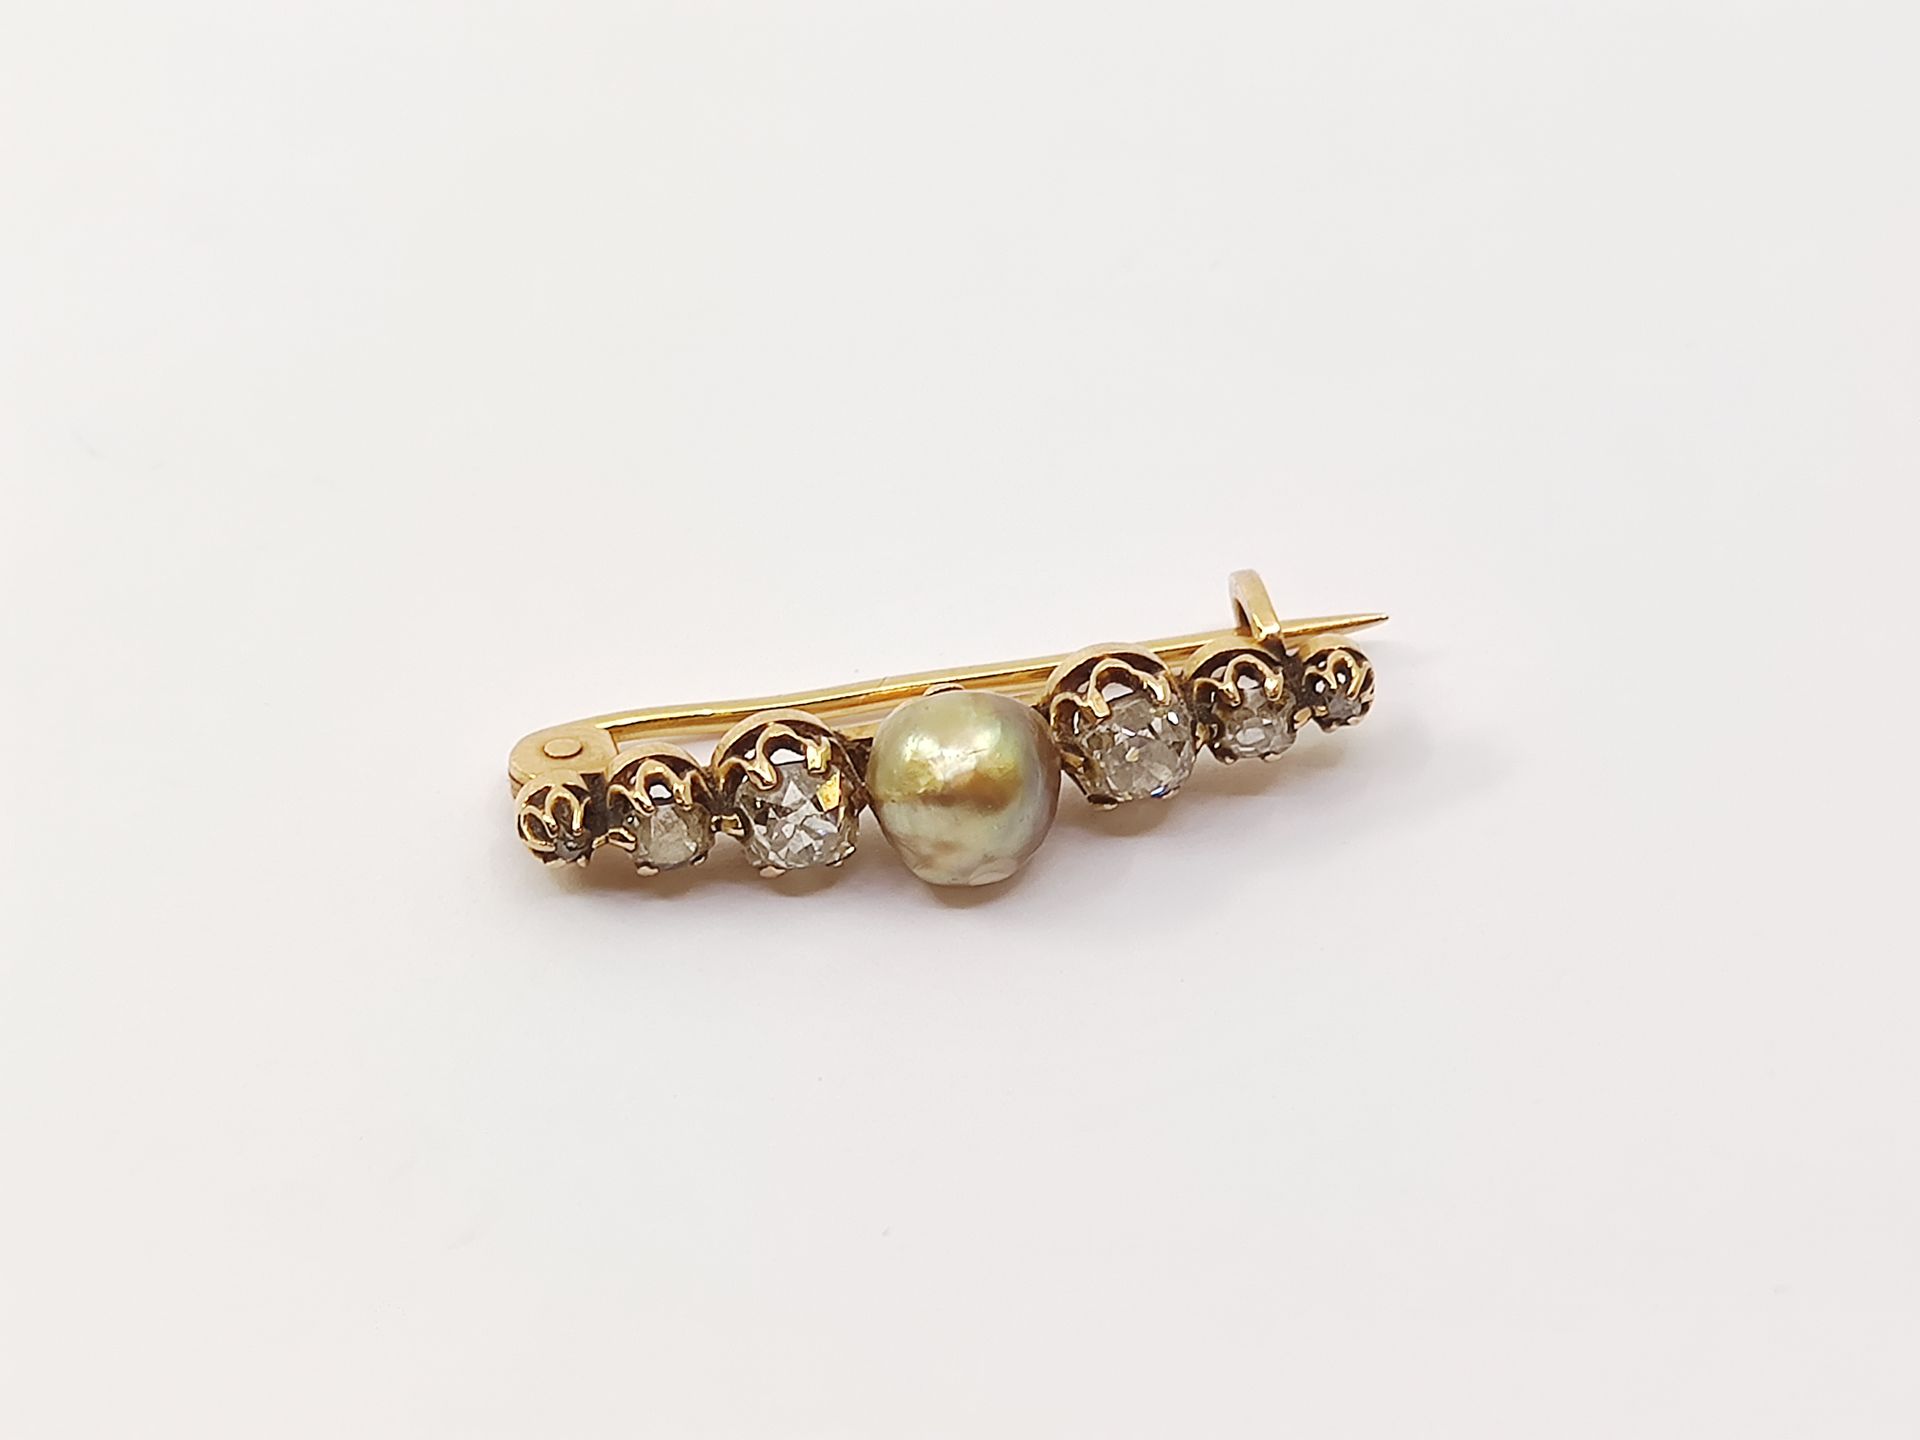 Null 
750°黄金PINK，中间镶嵌了一颗6.65毫米的珍珠，可能是上等珍珠，并镶嵌了四颗老式切割枕形钻石和两朵玫瑰花





编号为15 88



&hellip;